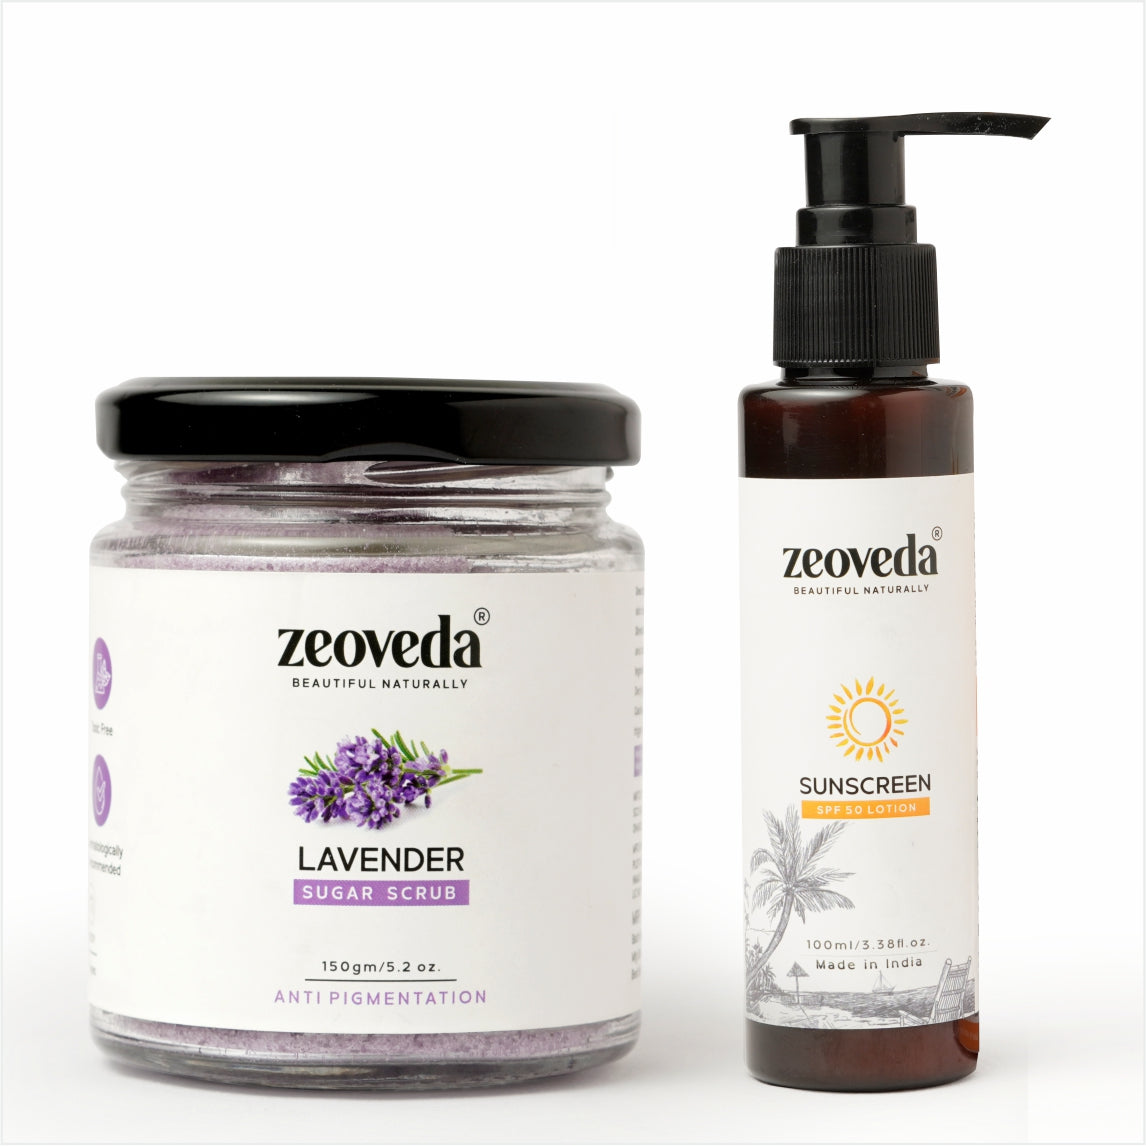 Lavender Sugar Scrub(150GM) + Sunscreen SPF 50(100ML) Combo For Even Skin Tone & Sun Protection